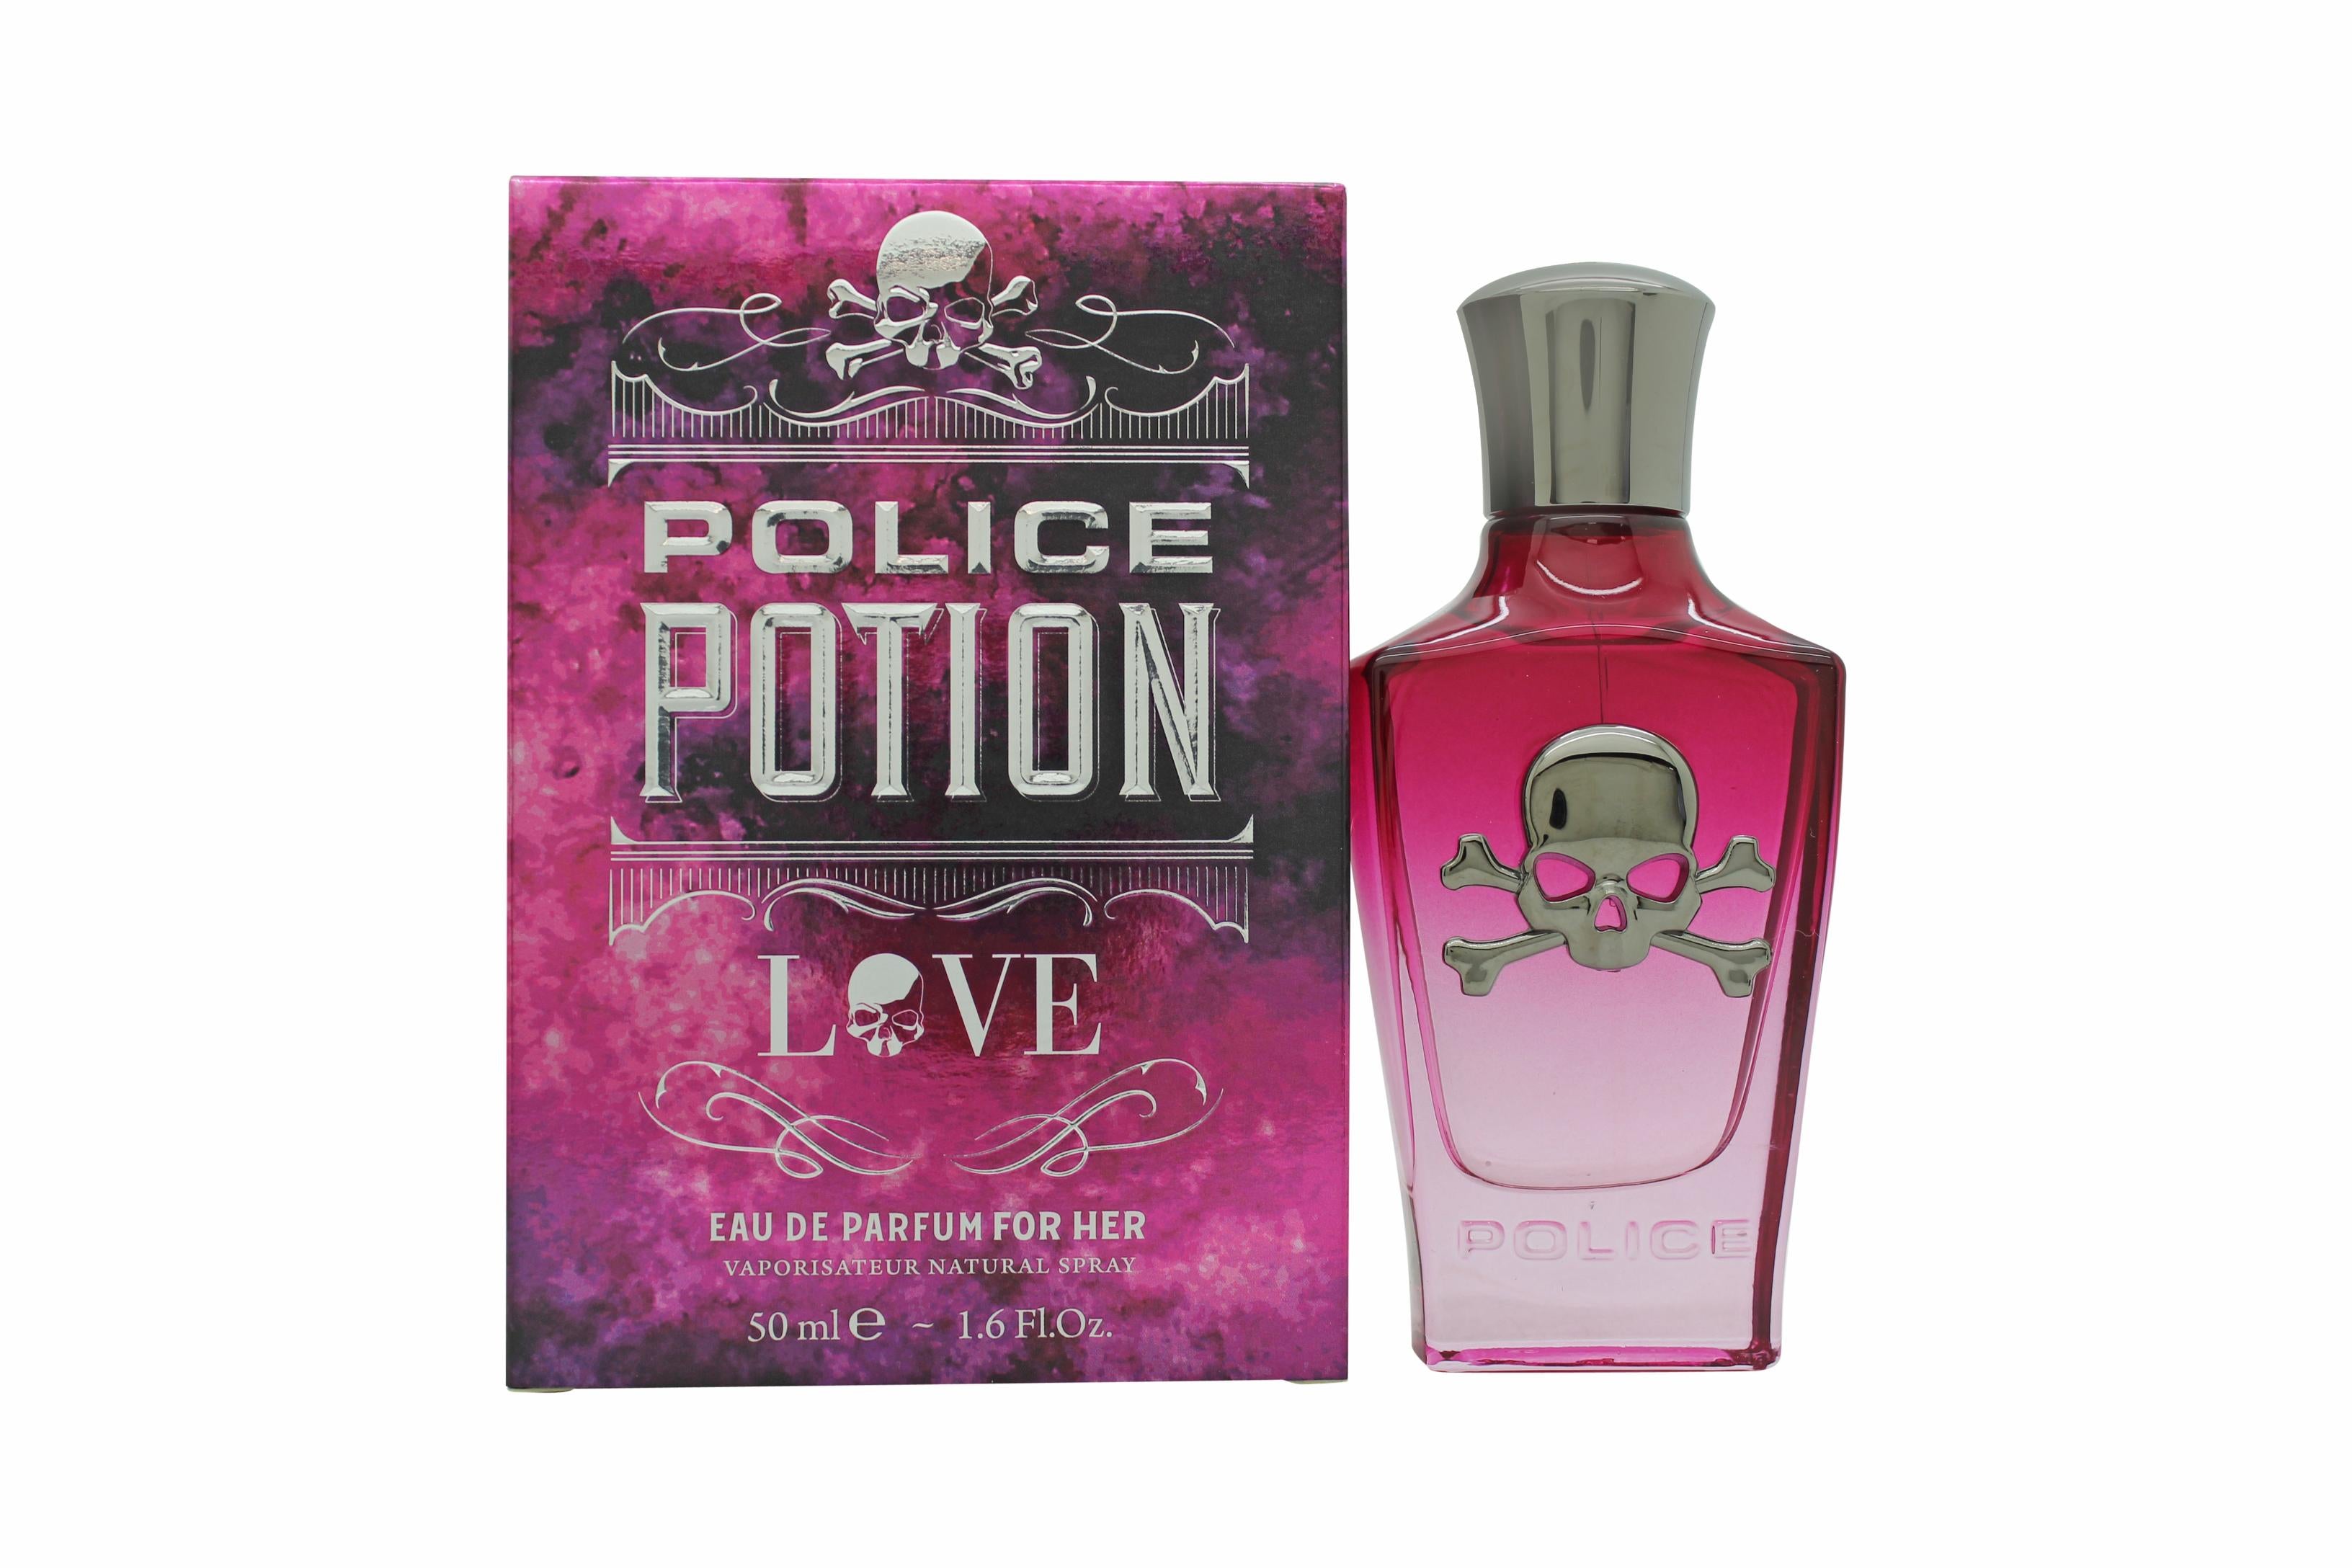 View Police Potion Love Eau de Parfum 50ml Spray information